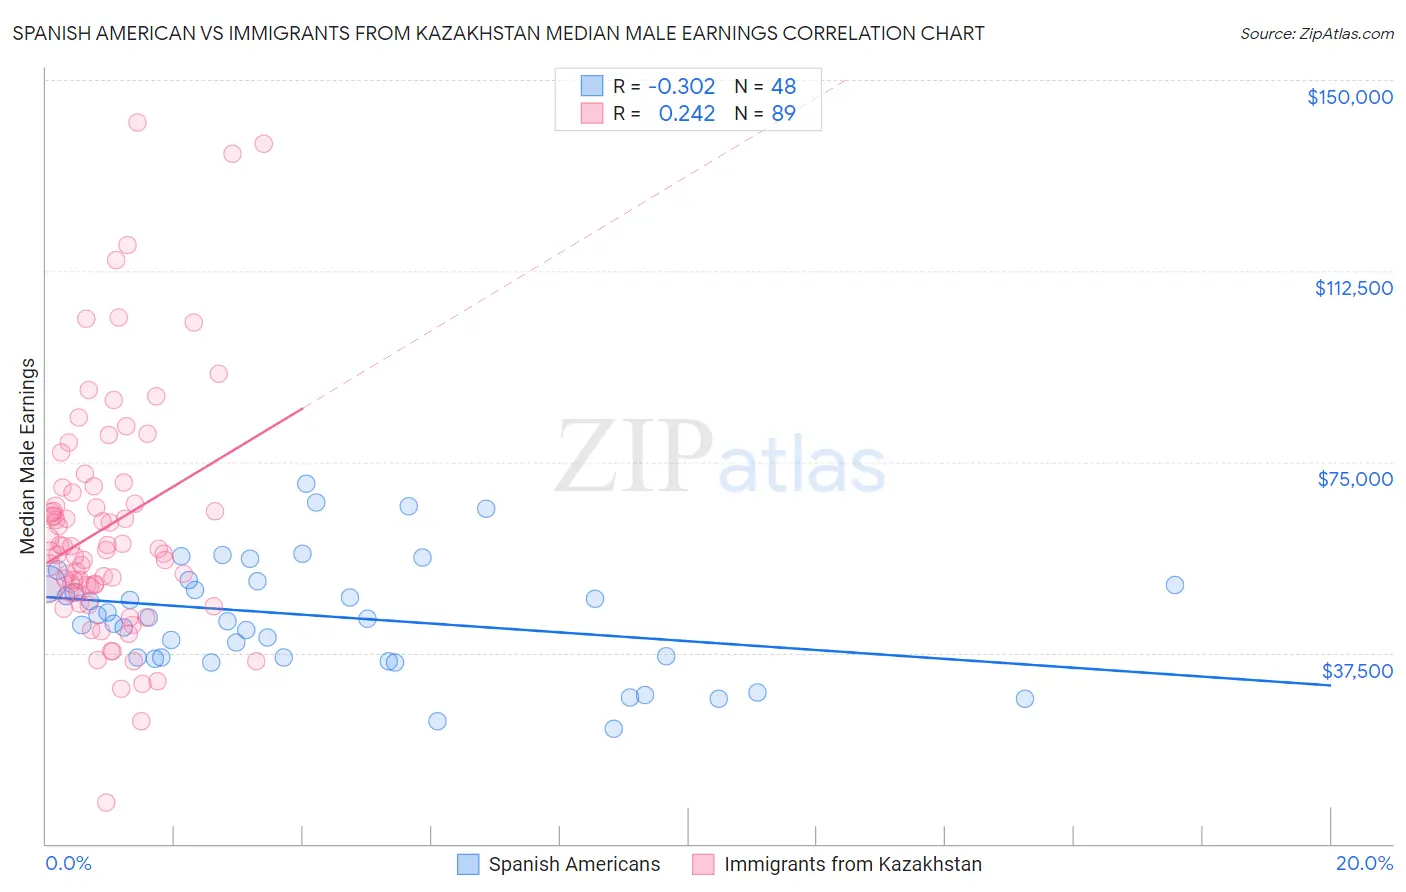 Spanish American vs Immigrants from Kazakhstan Median Male Earnings